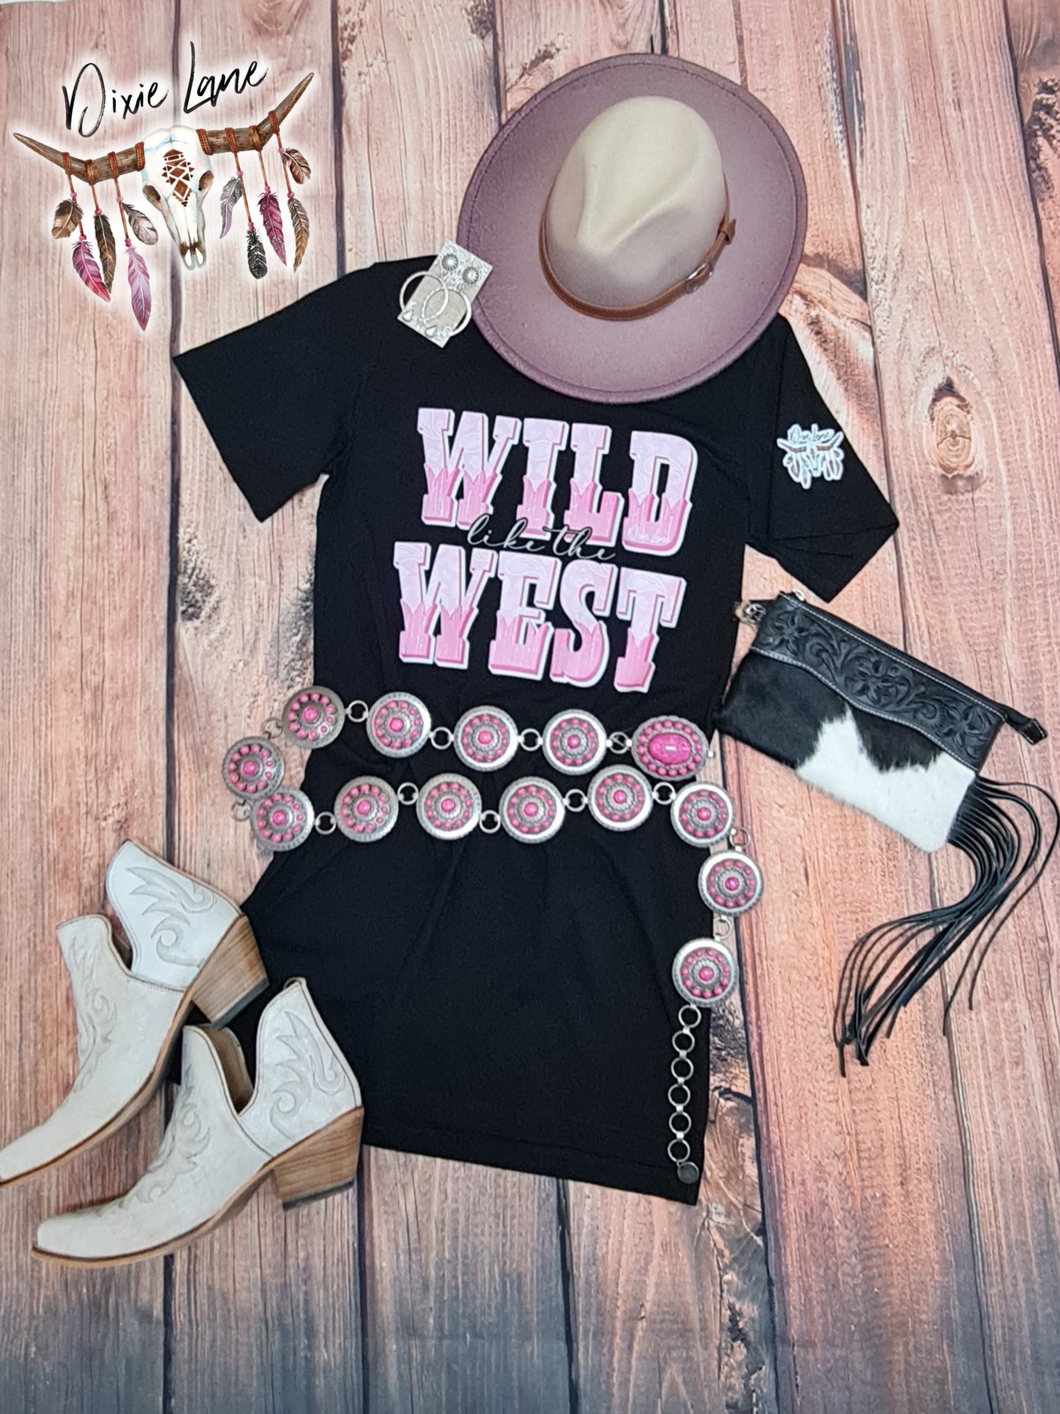 Wild like the West T-Shirt Dress